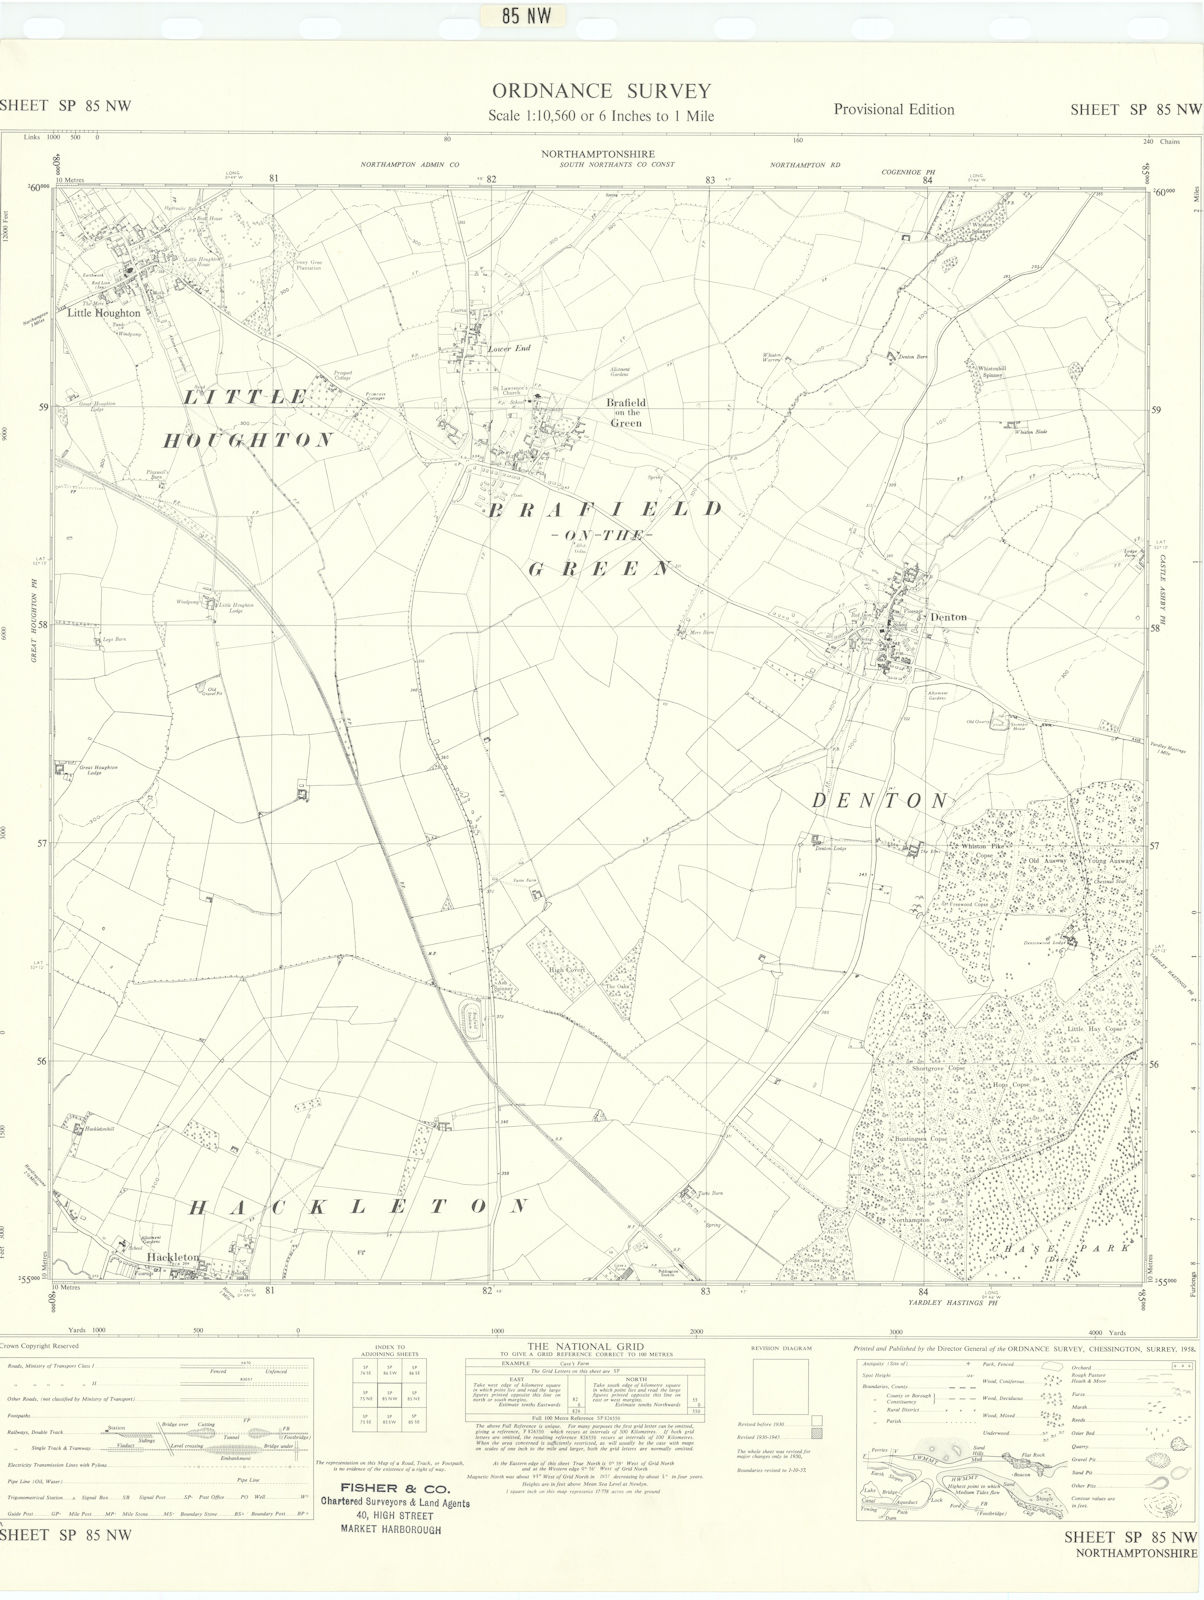 Ordnance Survey SP85NW Northants Little Houghton Denton Brafield/Green 1958 map